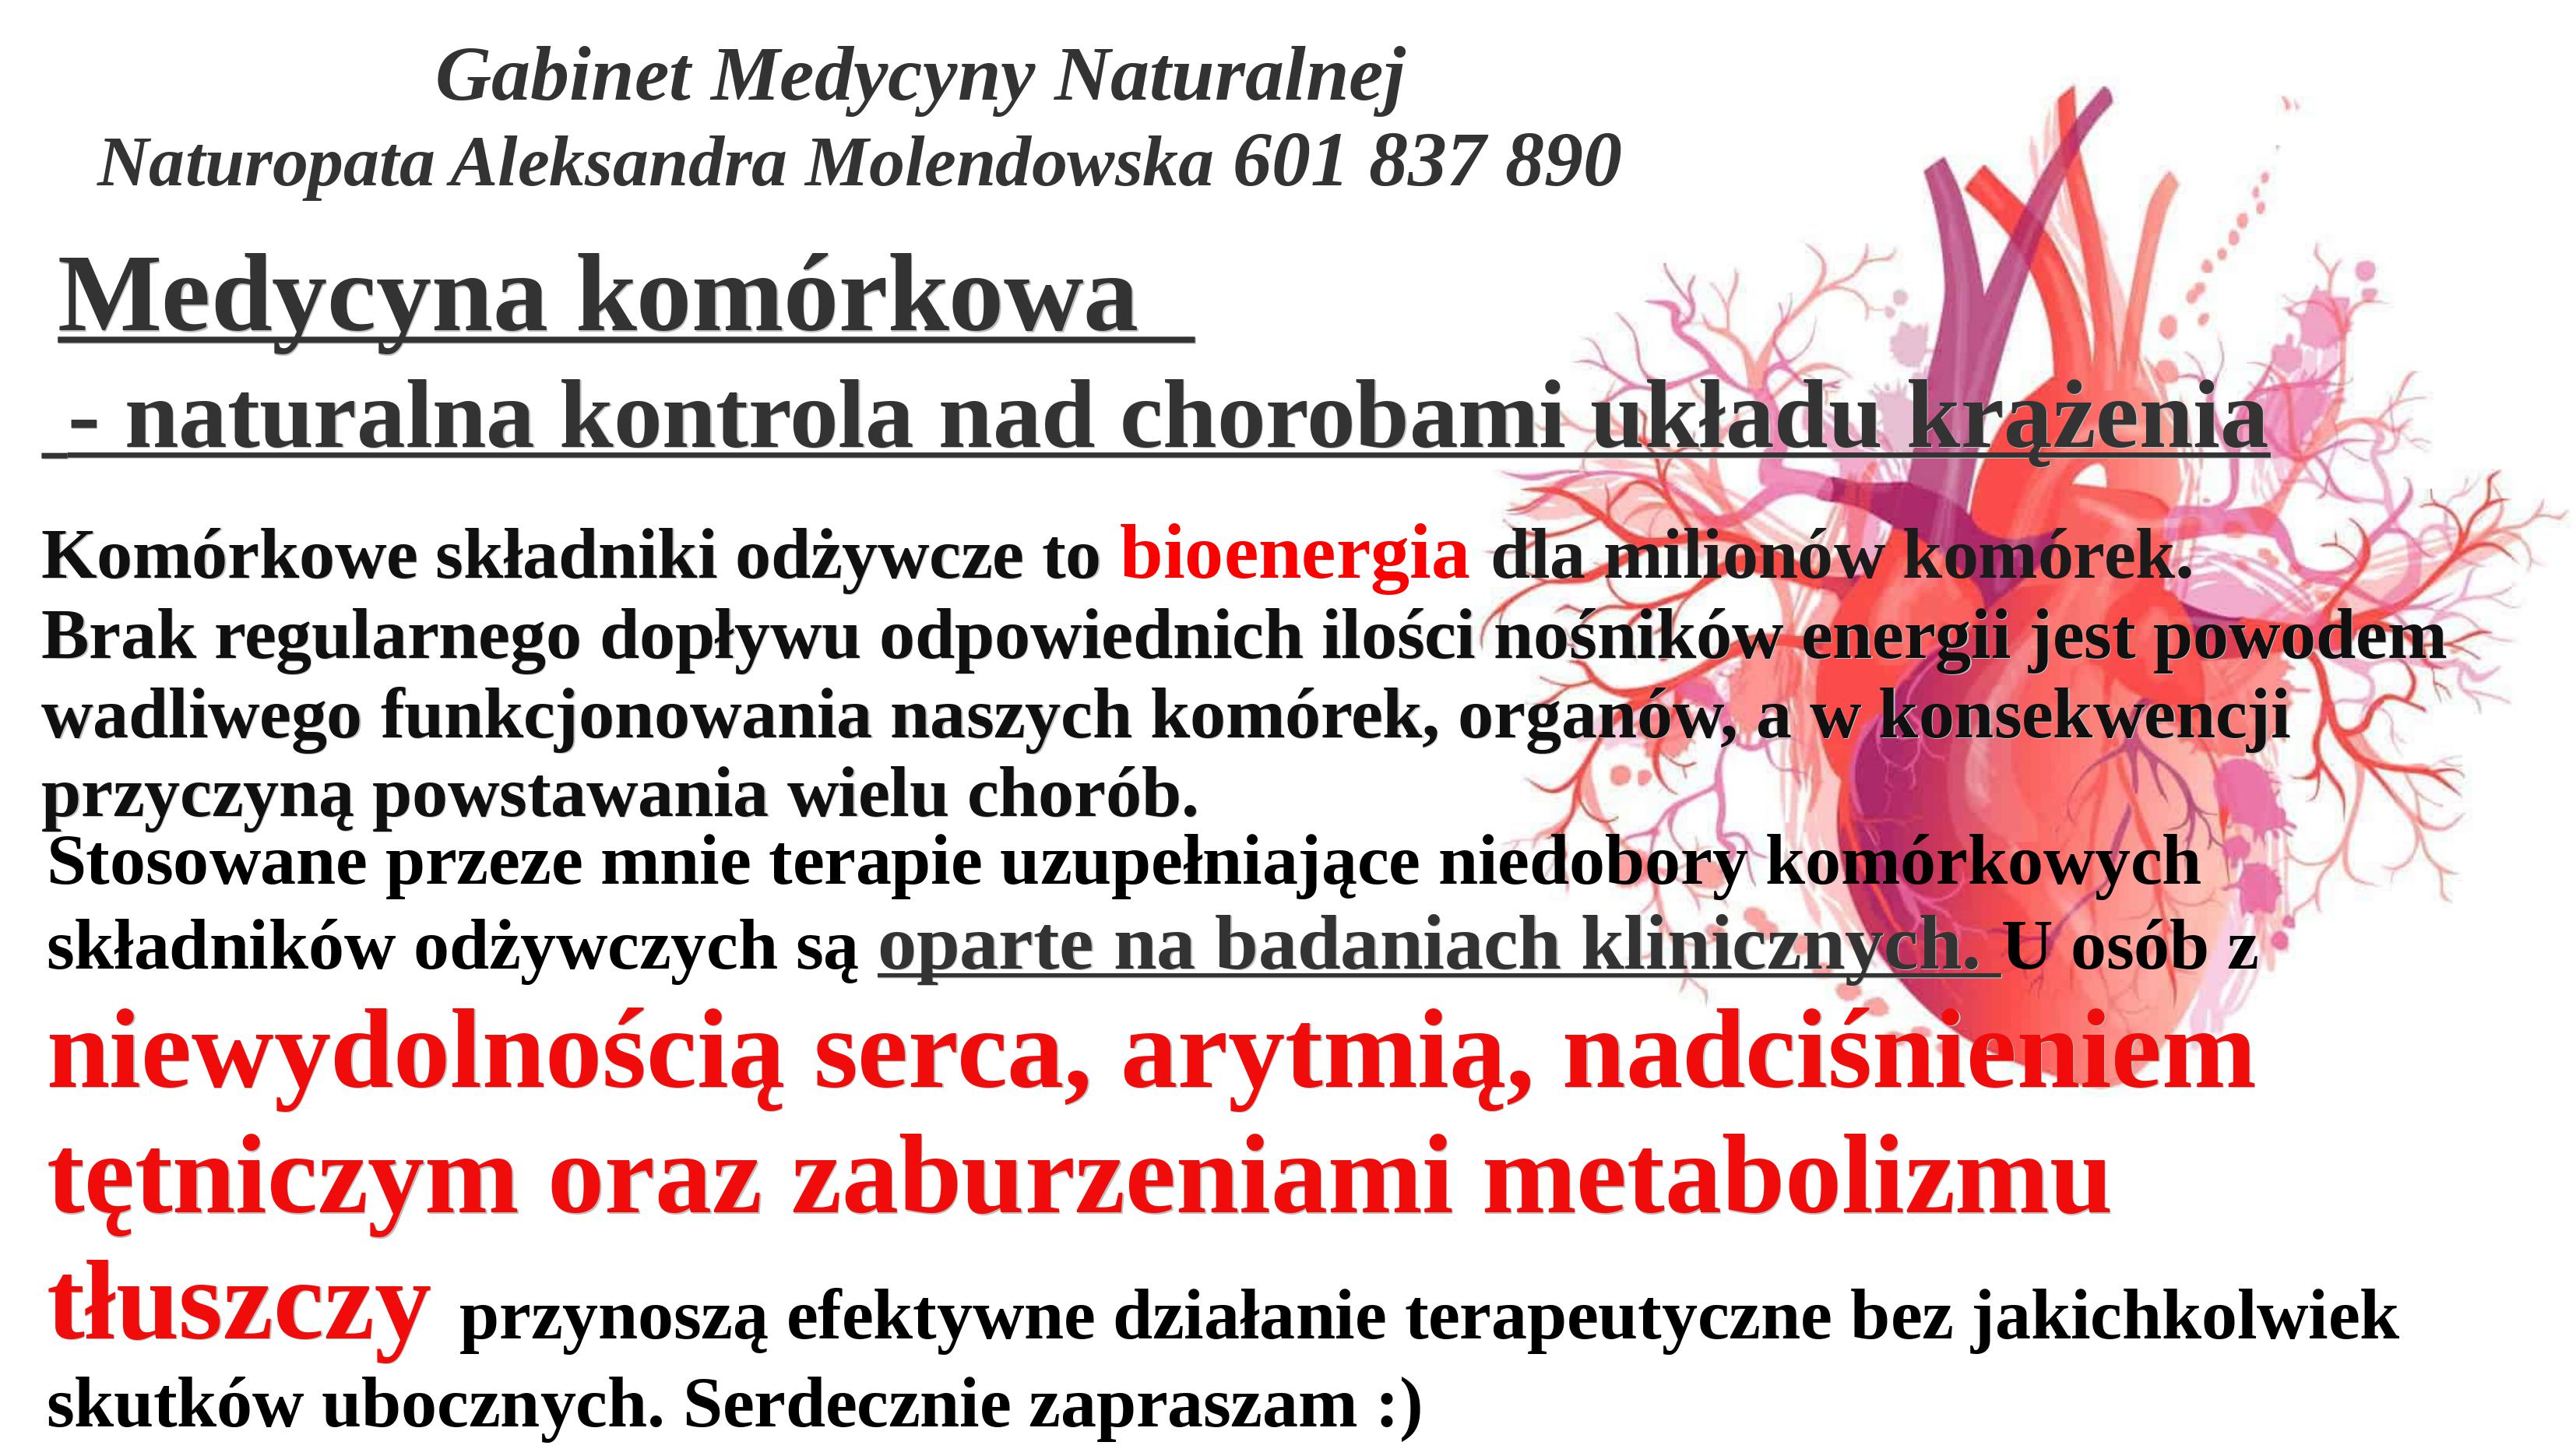 nk user gallery 2 - LeczNaturalnie.pl